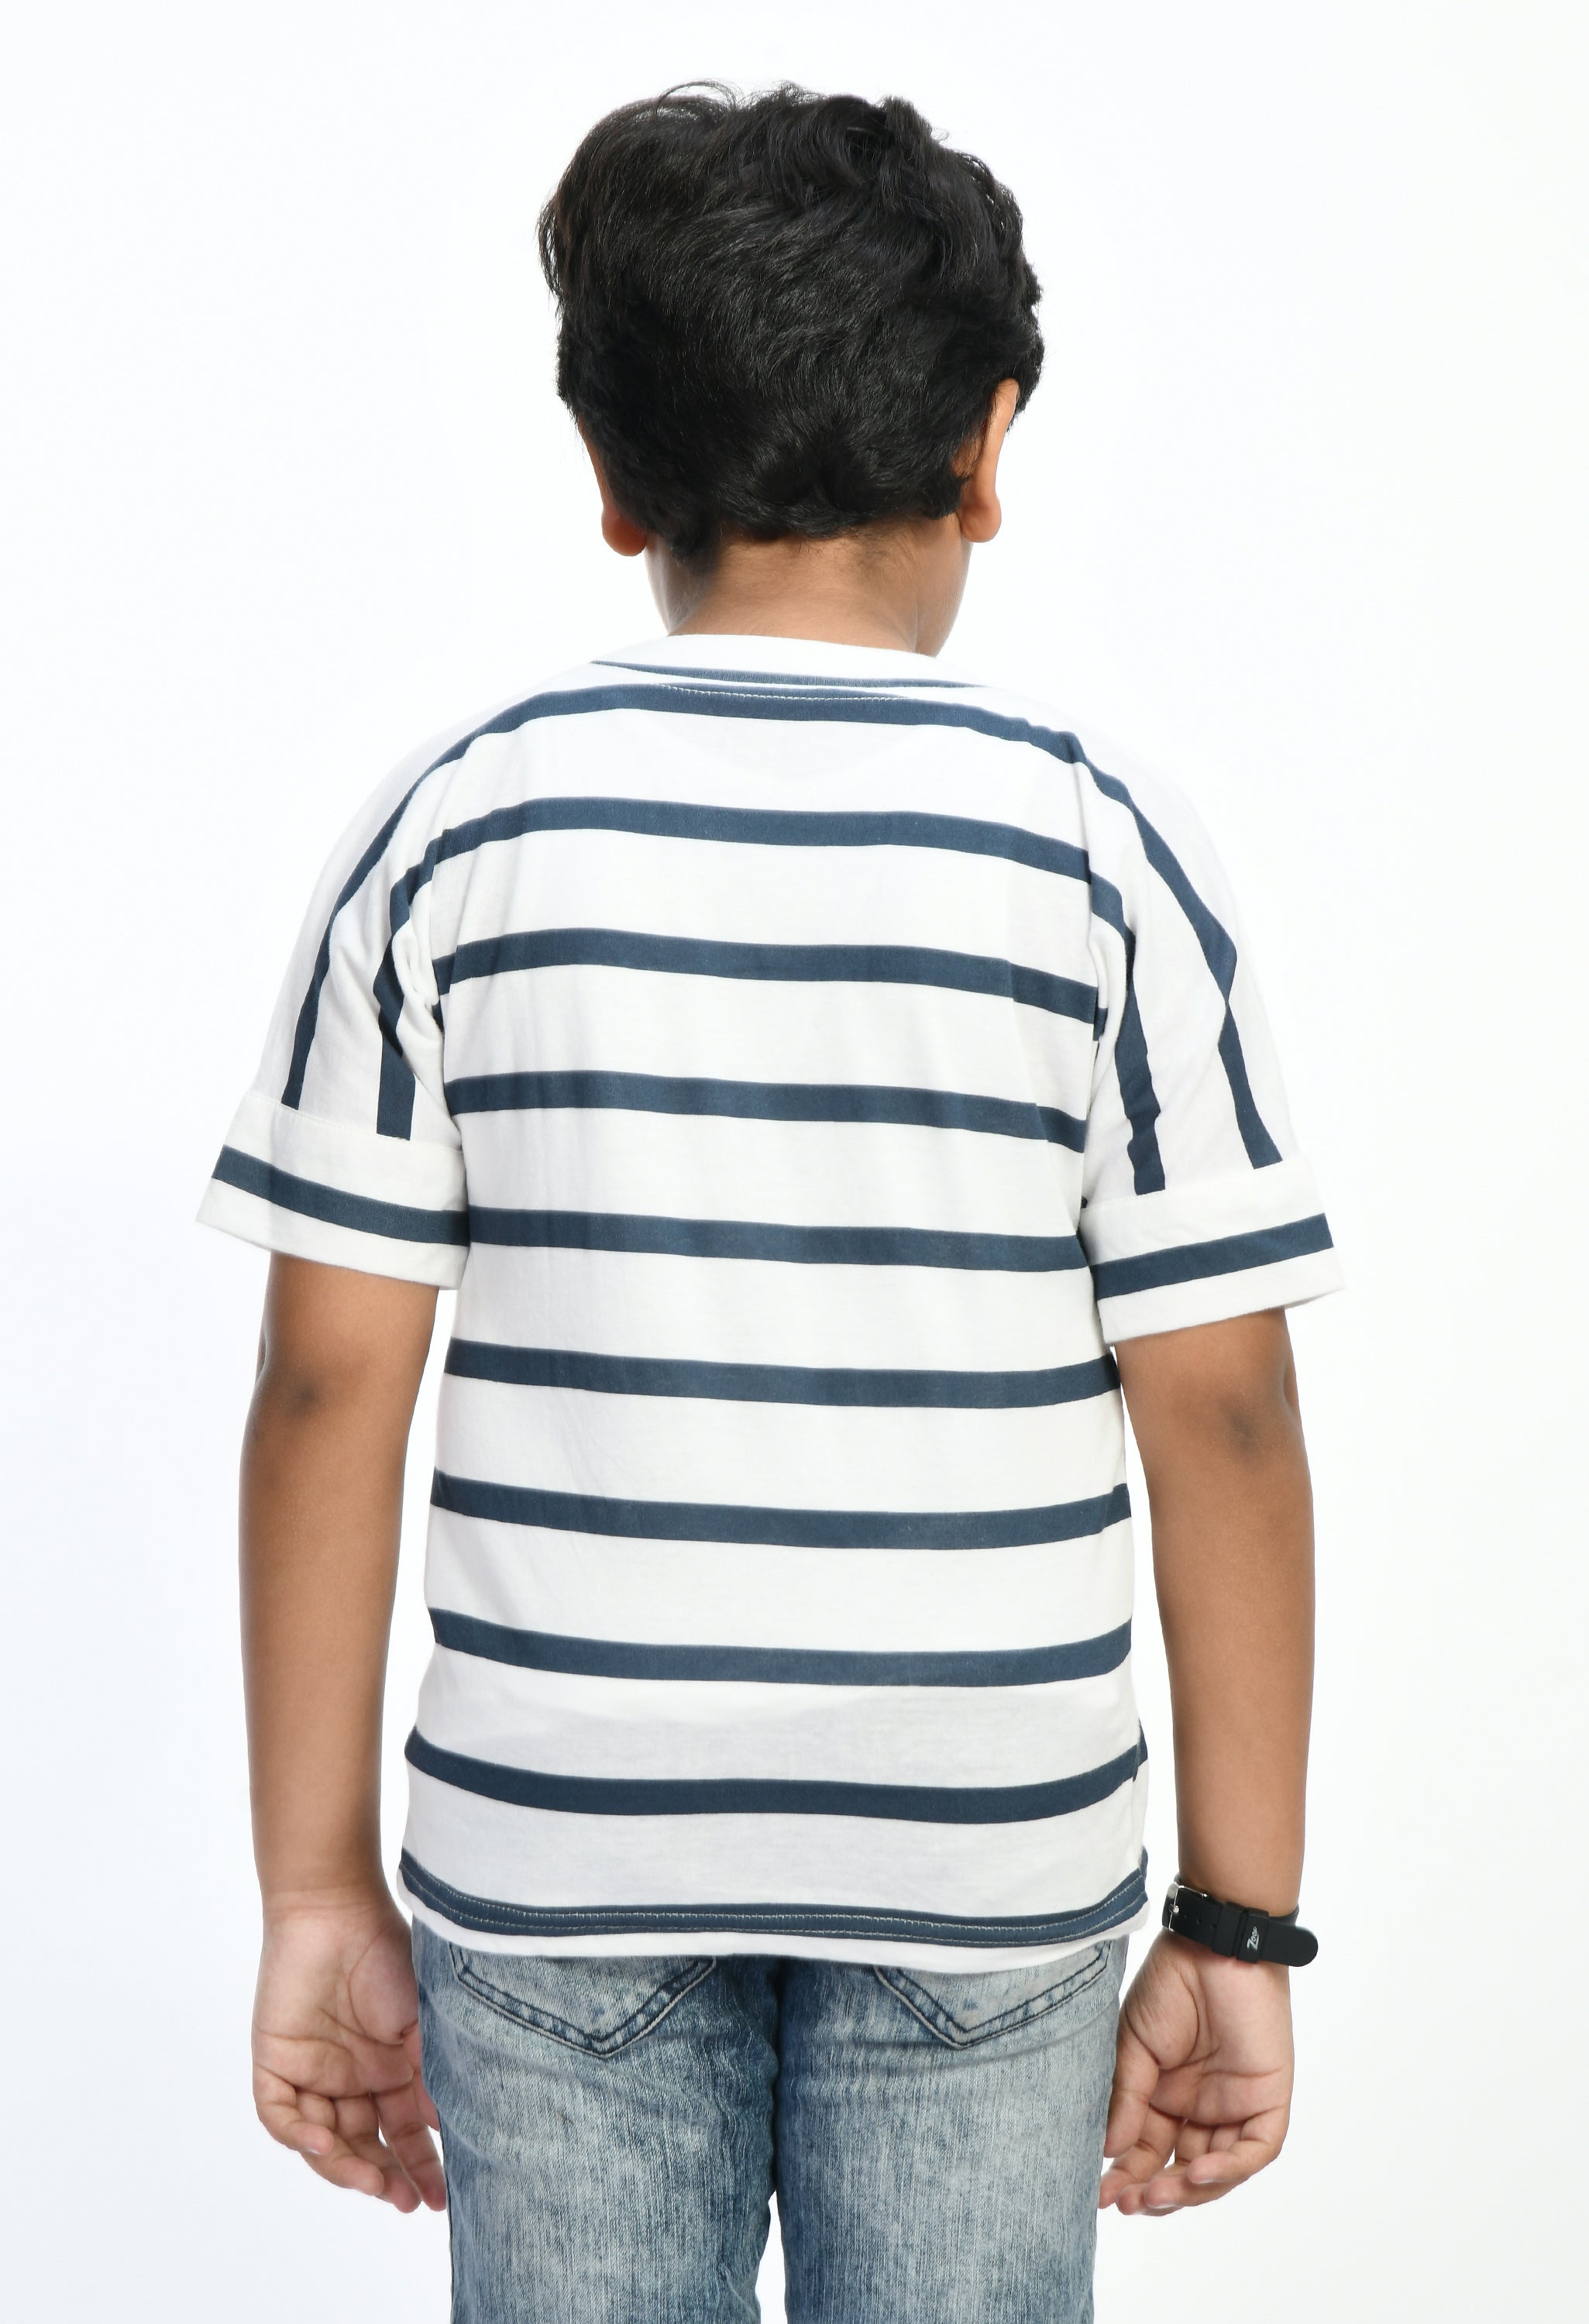 Boys Striped T-shirt (Blue over White)